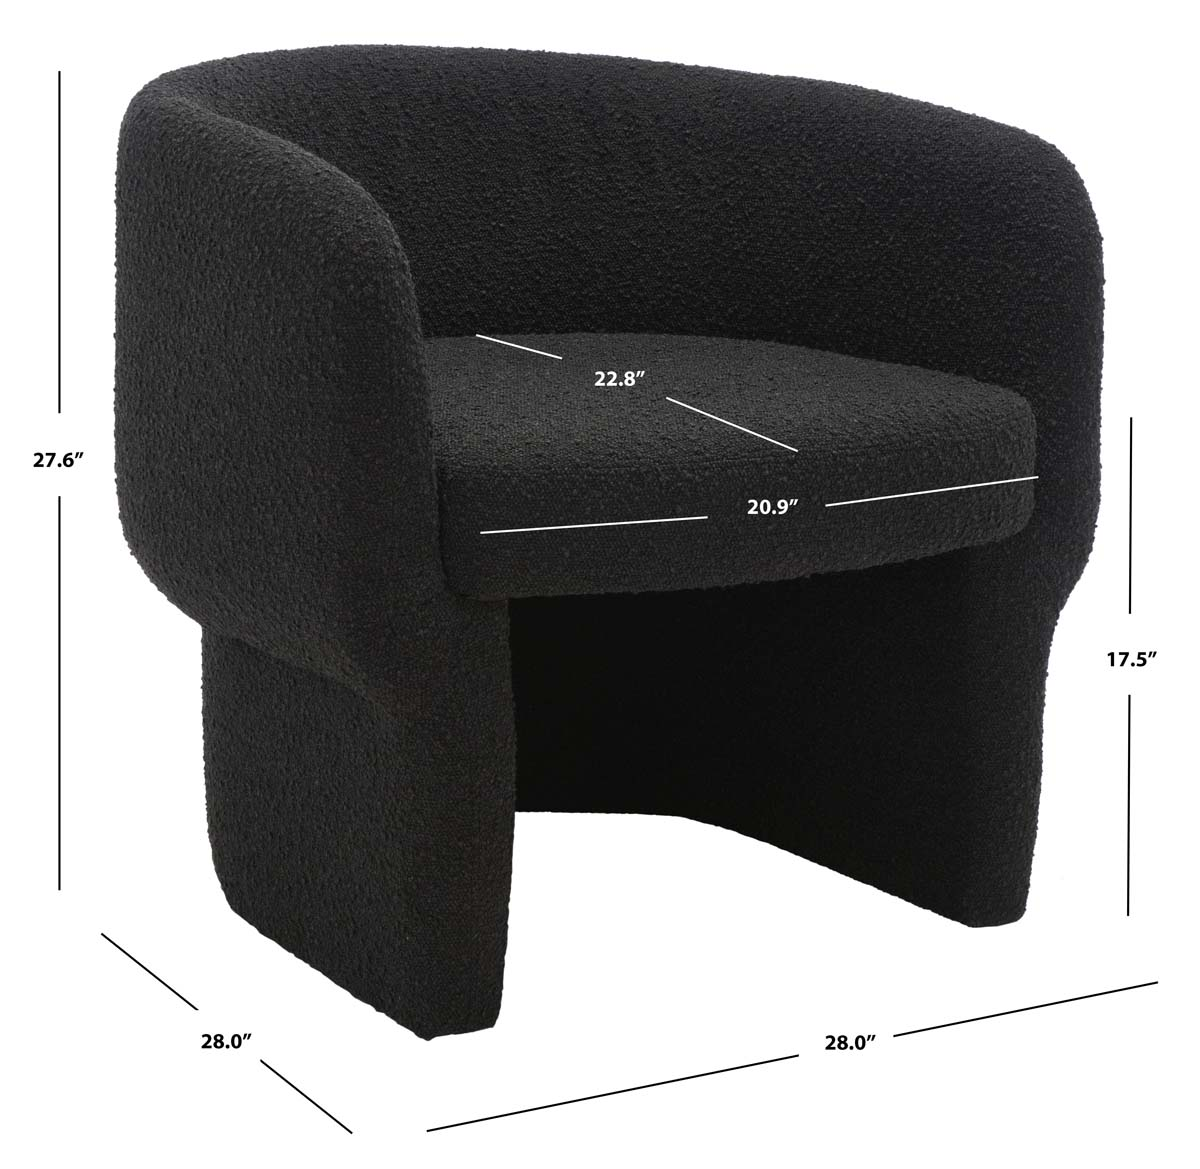 Safavieh Couture Kellyanne Boucle Modern Accent Chair - Black